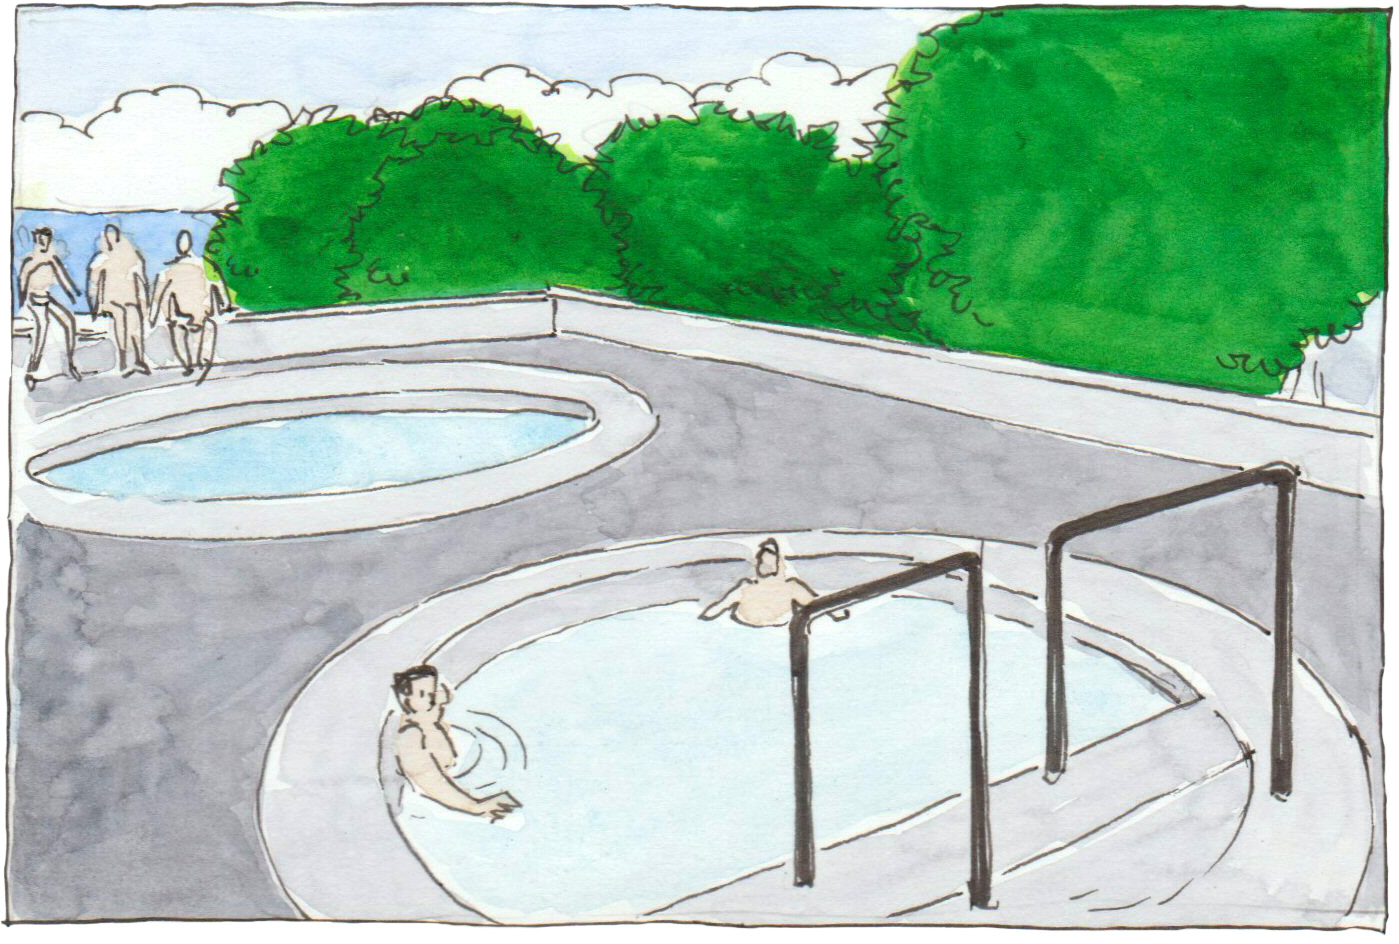 Ficoncella Thermal Baths - Illustration by Mario Camerini